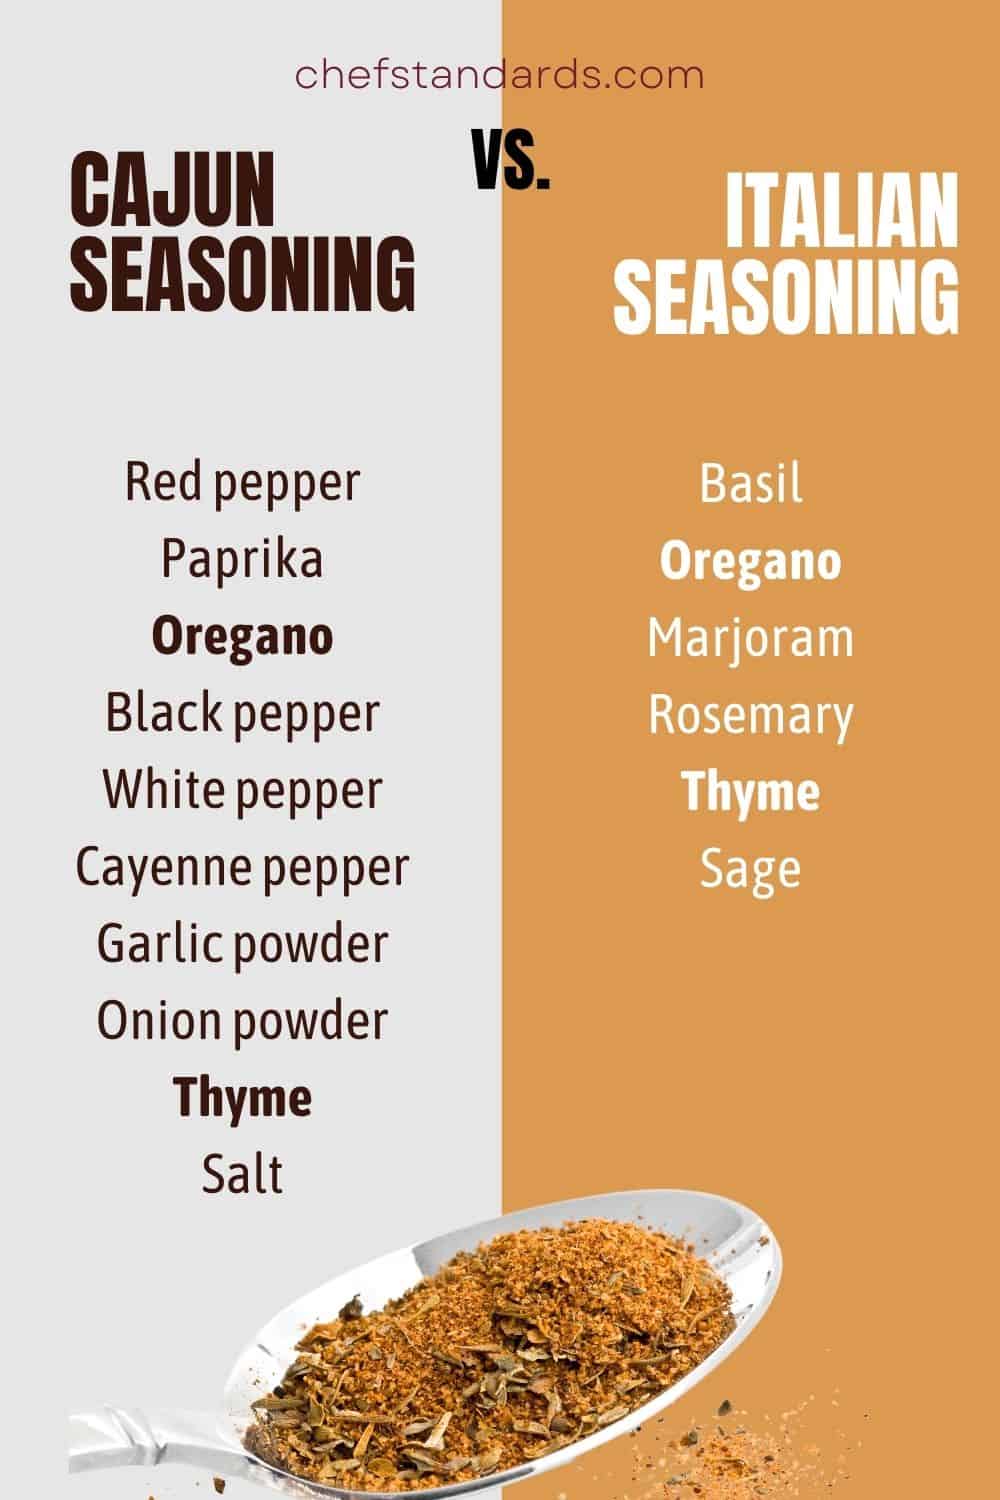 CAJUN SEASONINGvs. Italian seasoning